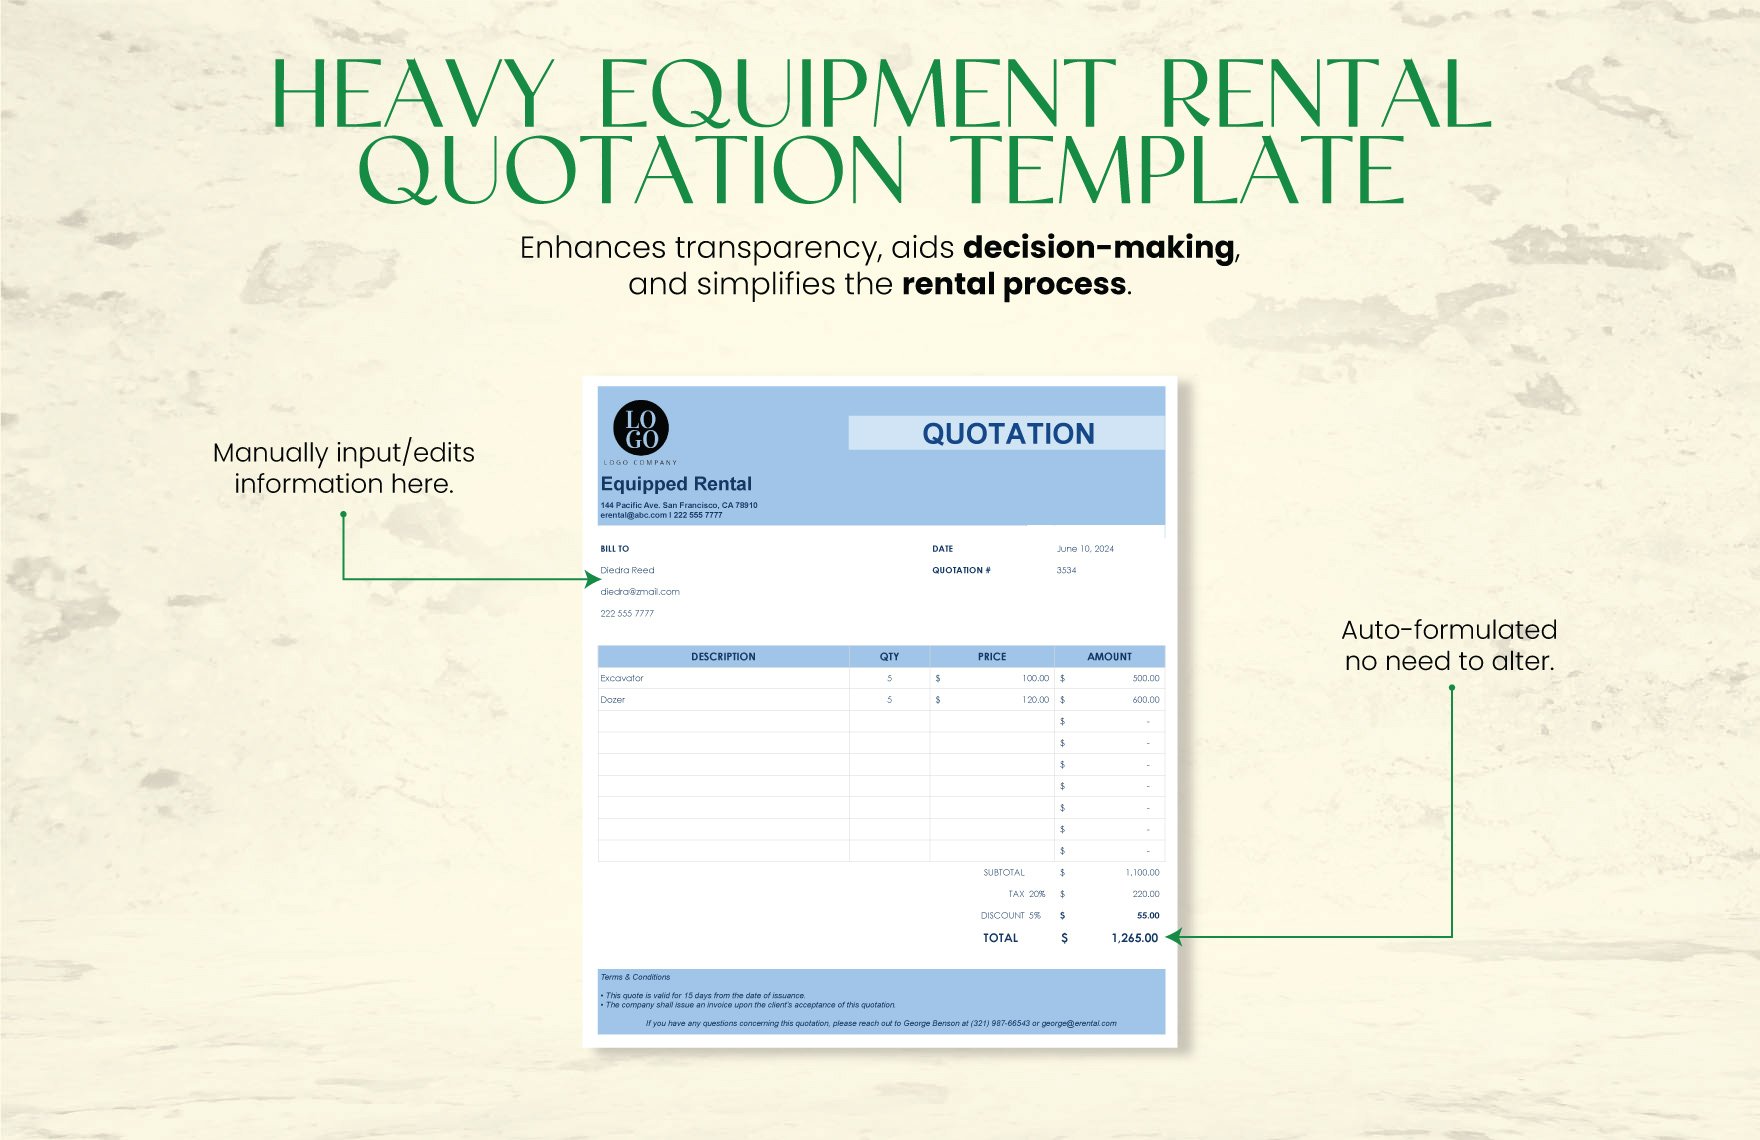 Heavy Equipment Rental Quotation Template